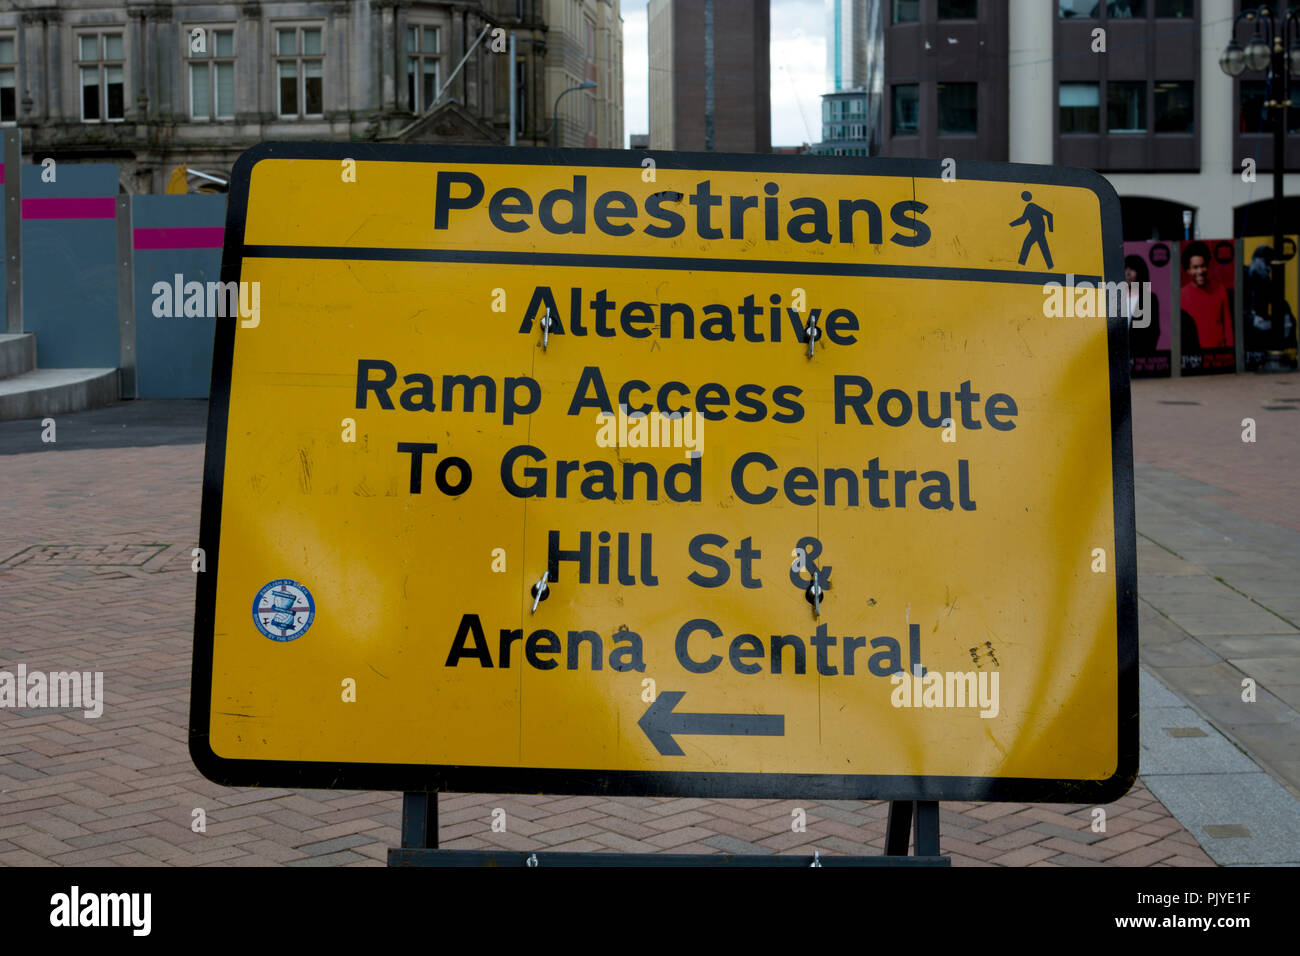 Spelling mistake on sign, Altenative instead of Alternative, Paradise Circus redevelopment, Birmingham, UK Stock Photo